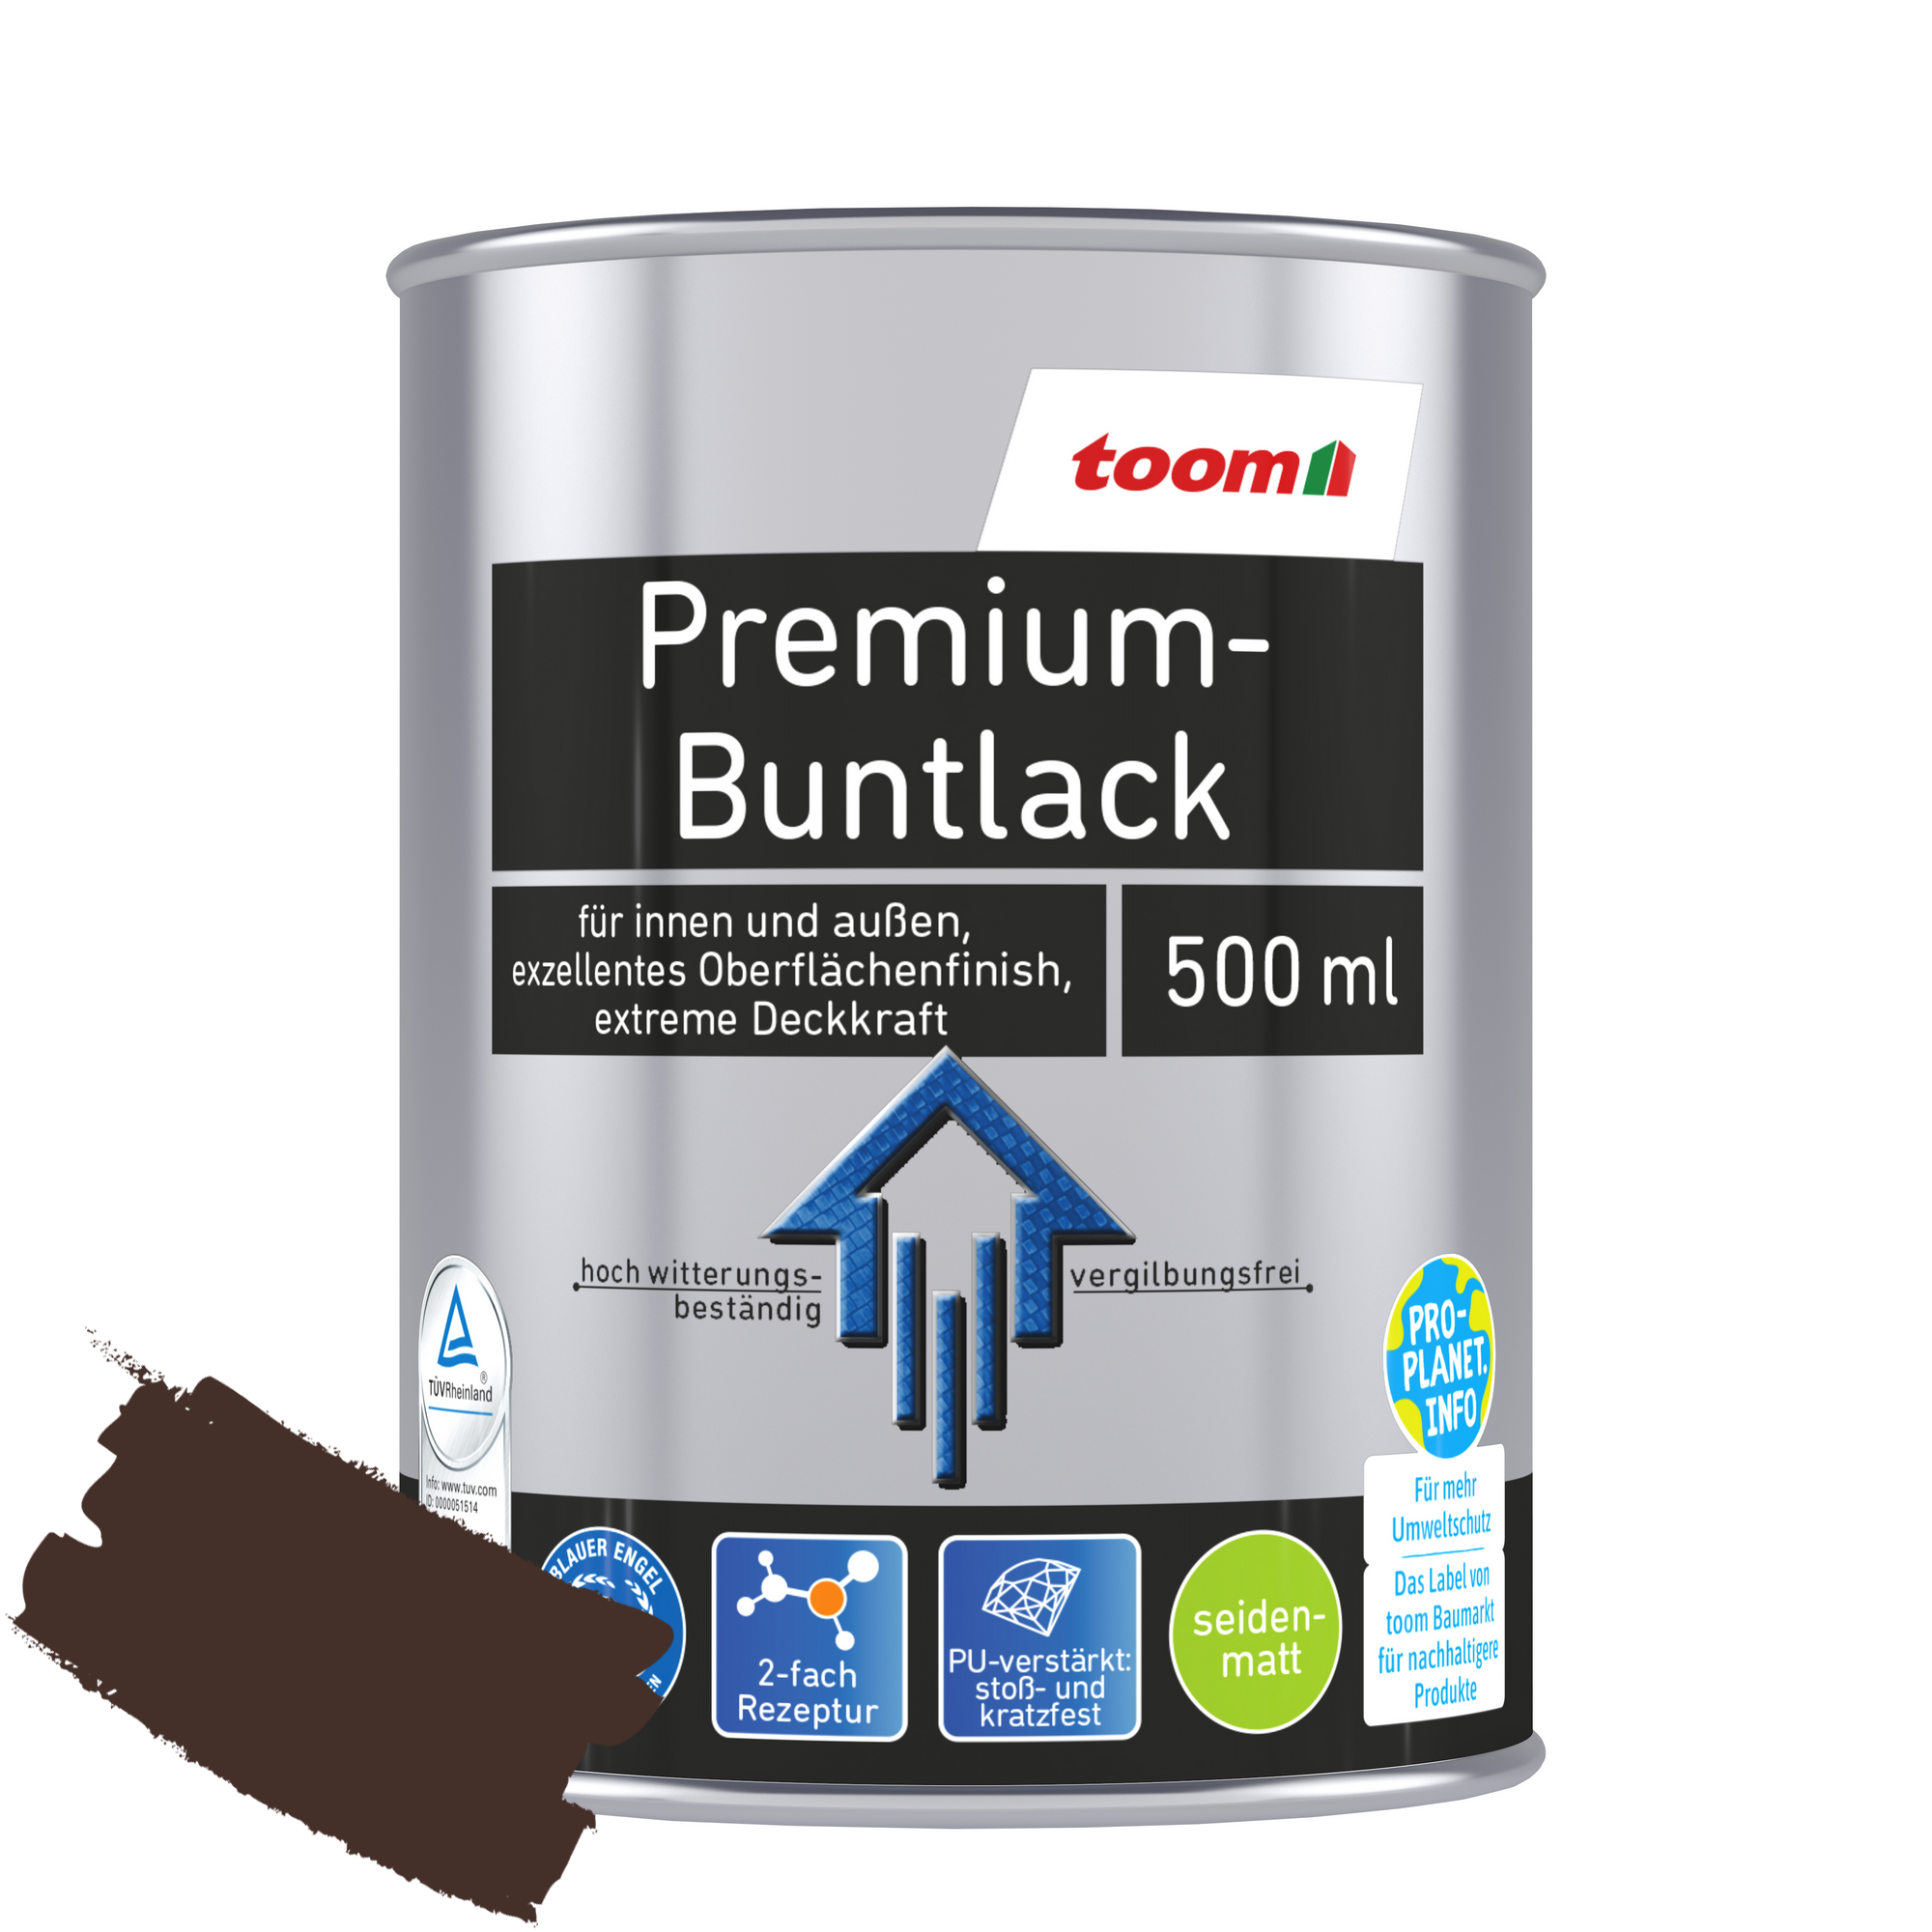 Premium-Buntlack schokobraun seidenmatt 500 ml + product picture